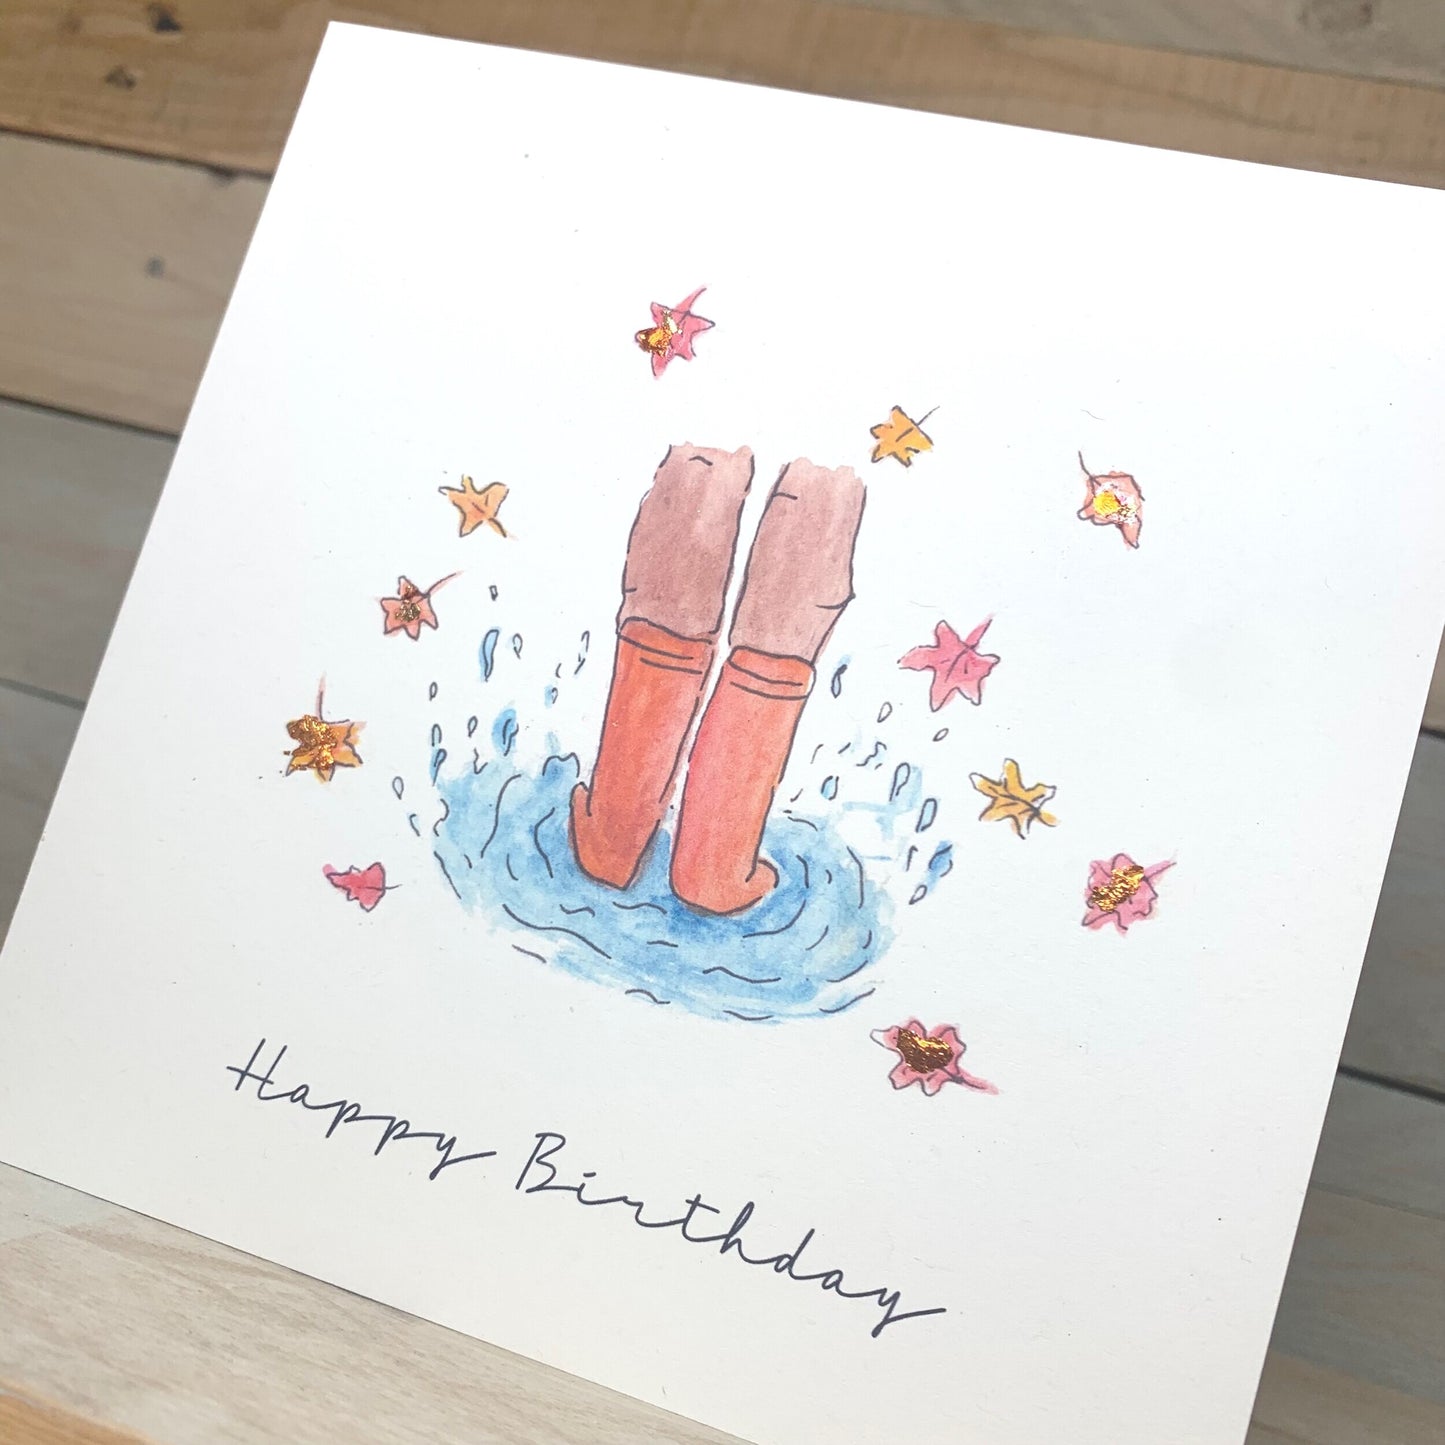 Splish Splash Autumn Birthday Card - Arty Bee Designs 